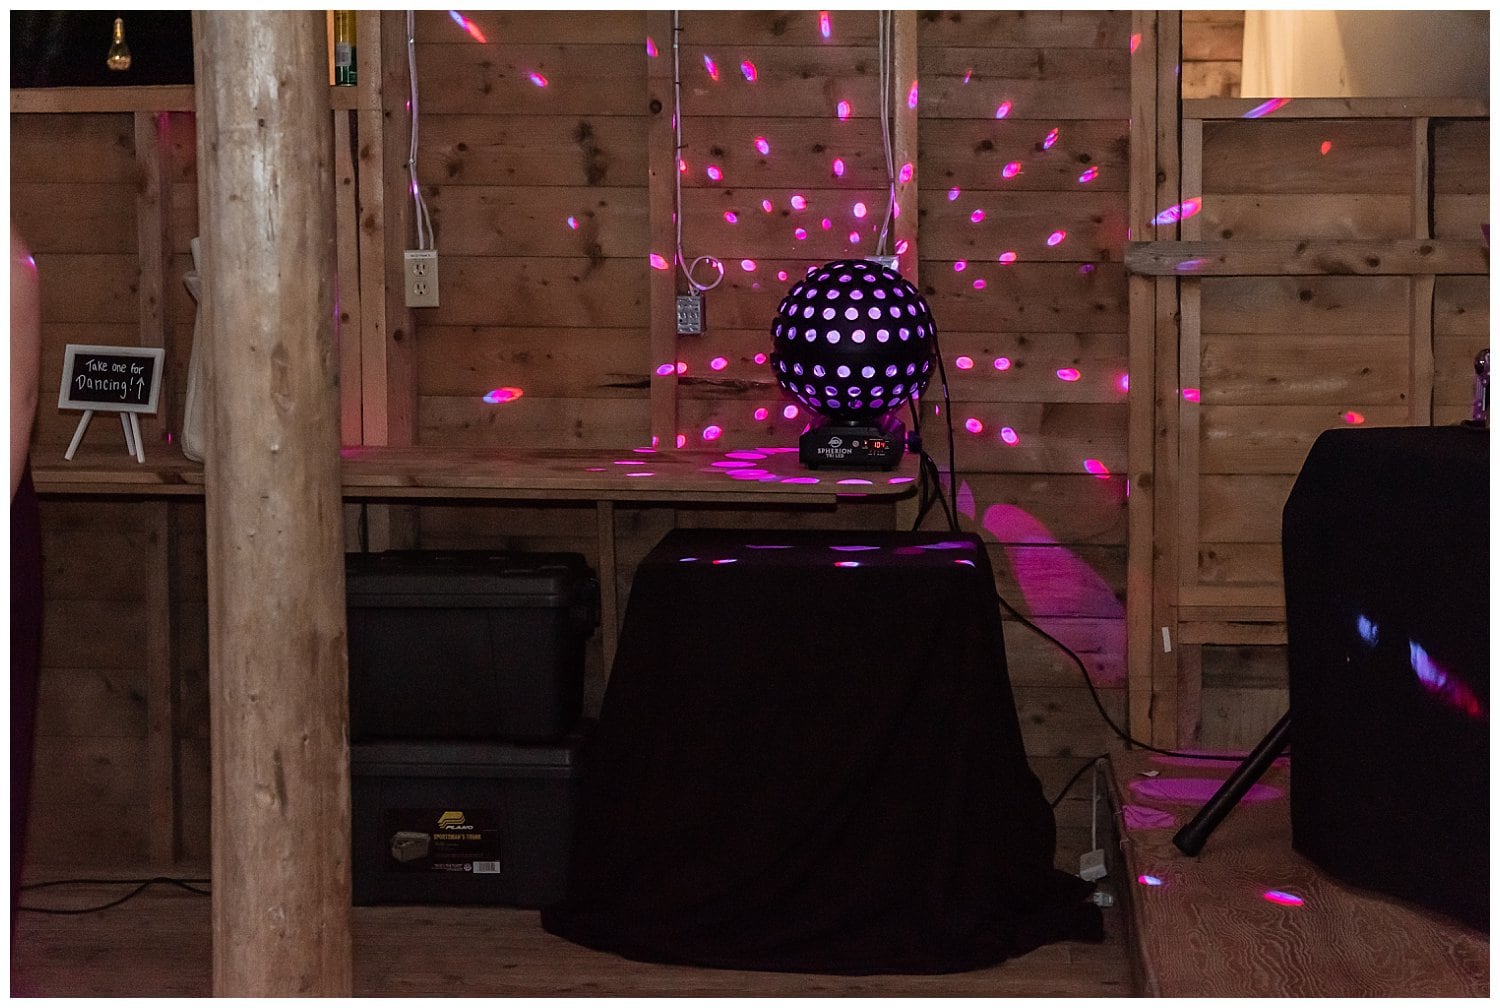 A DJ's globe lit up with purple lights.